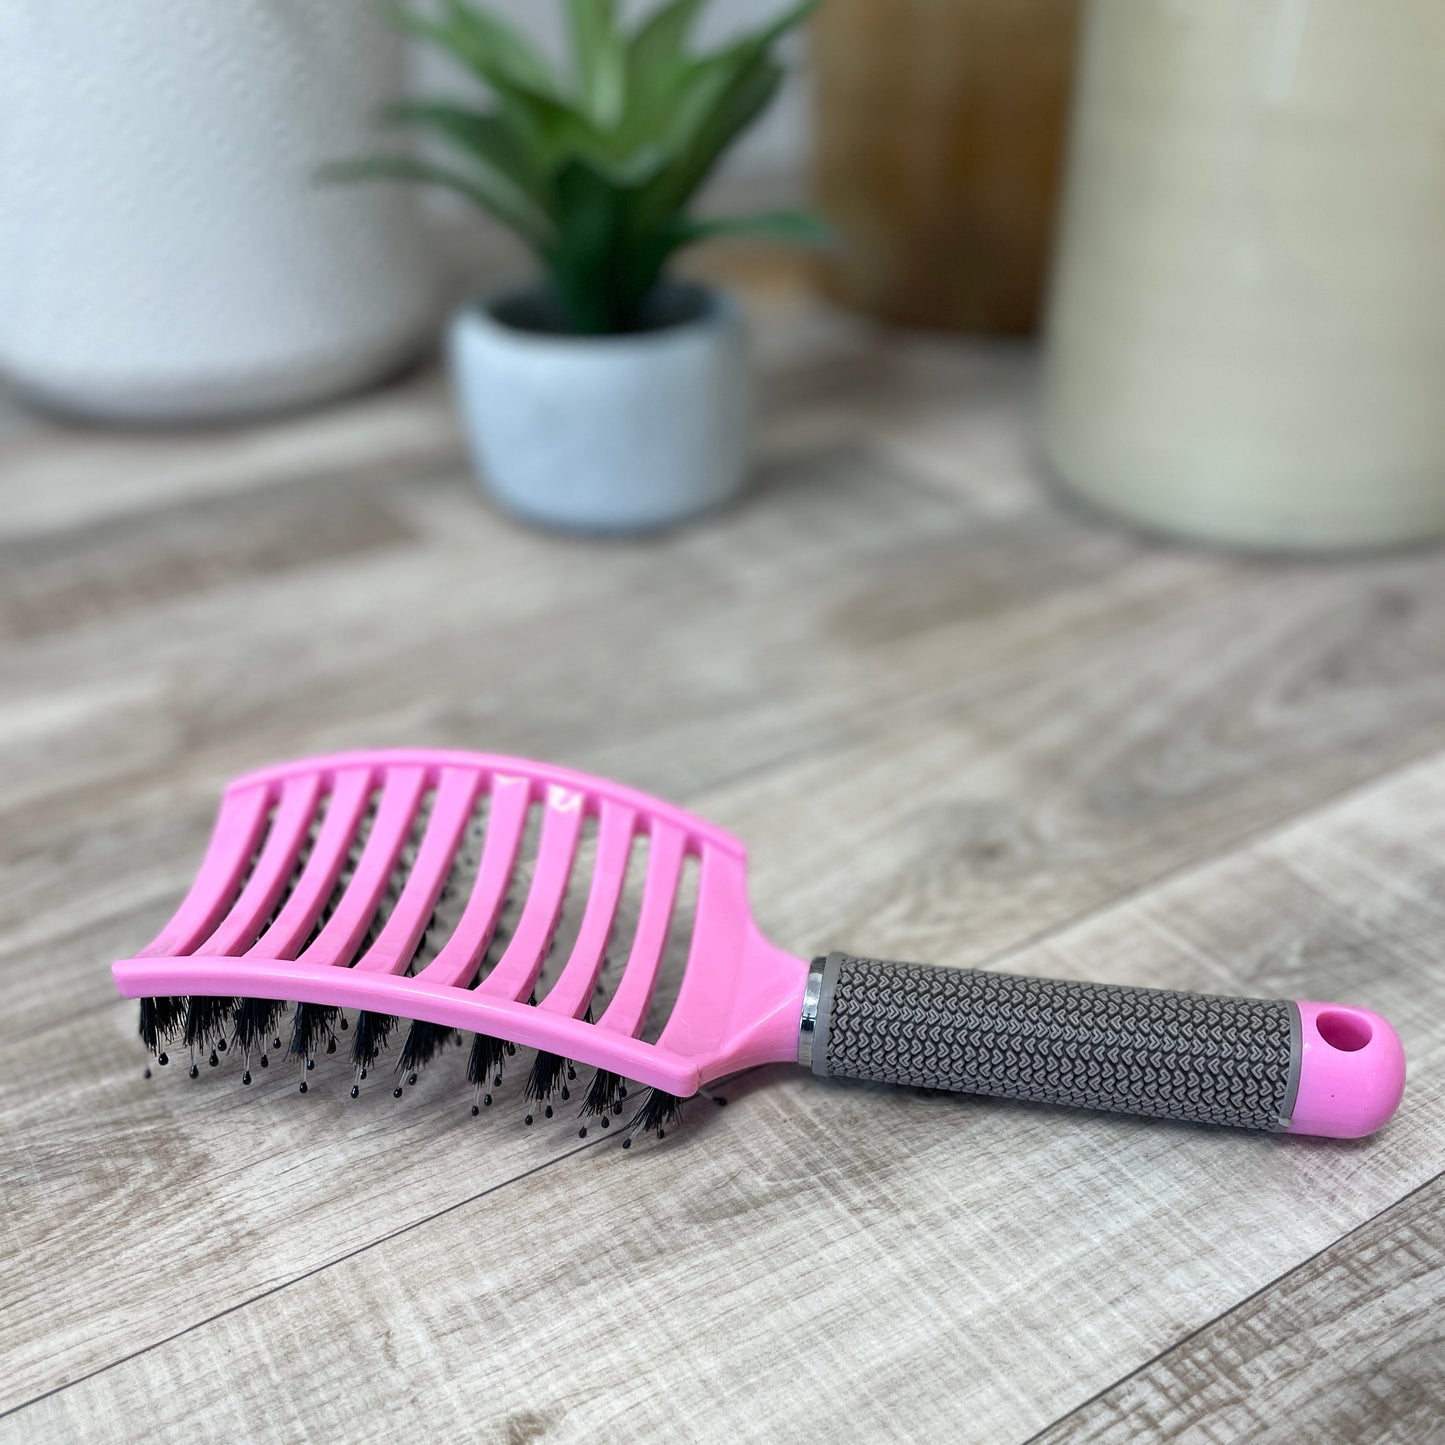 Buy Pink Hair Brush - House Of Hair New Zealand Haircare